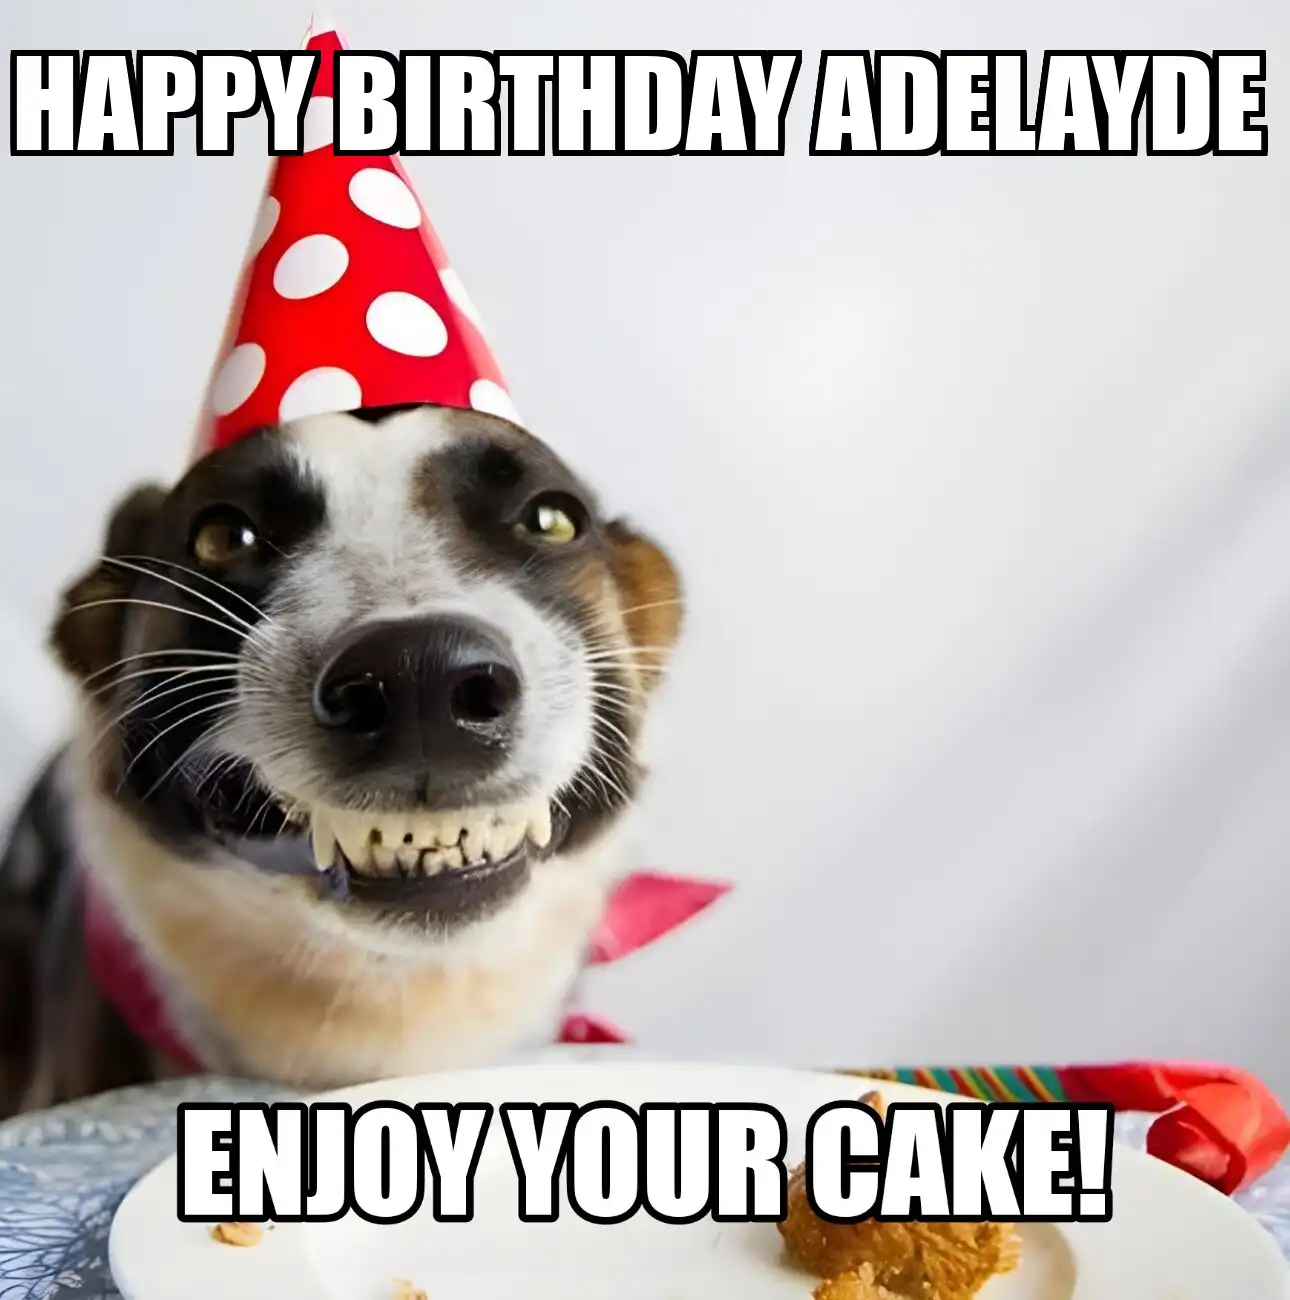 Happy Birthday Adelayde Enjoy Your Cake Dog Meme